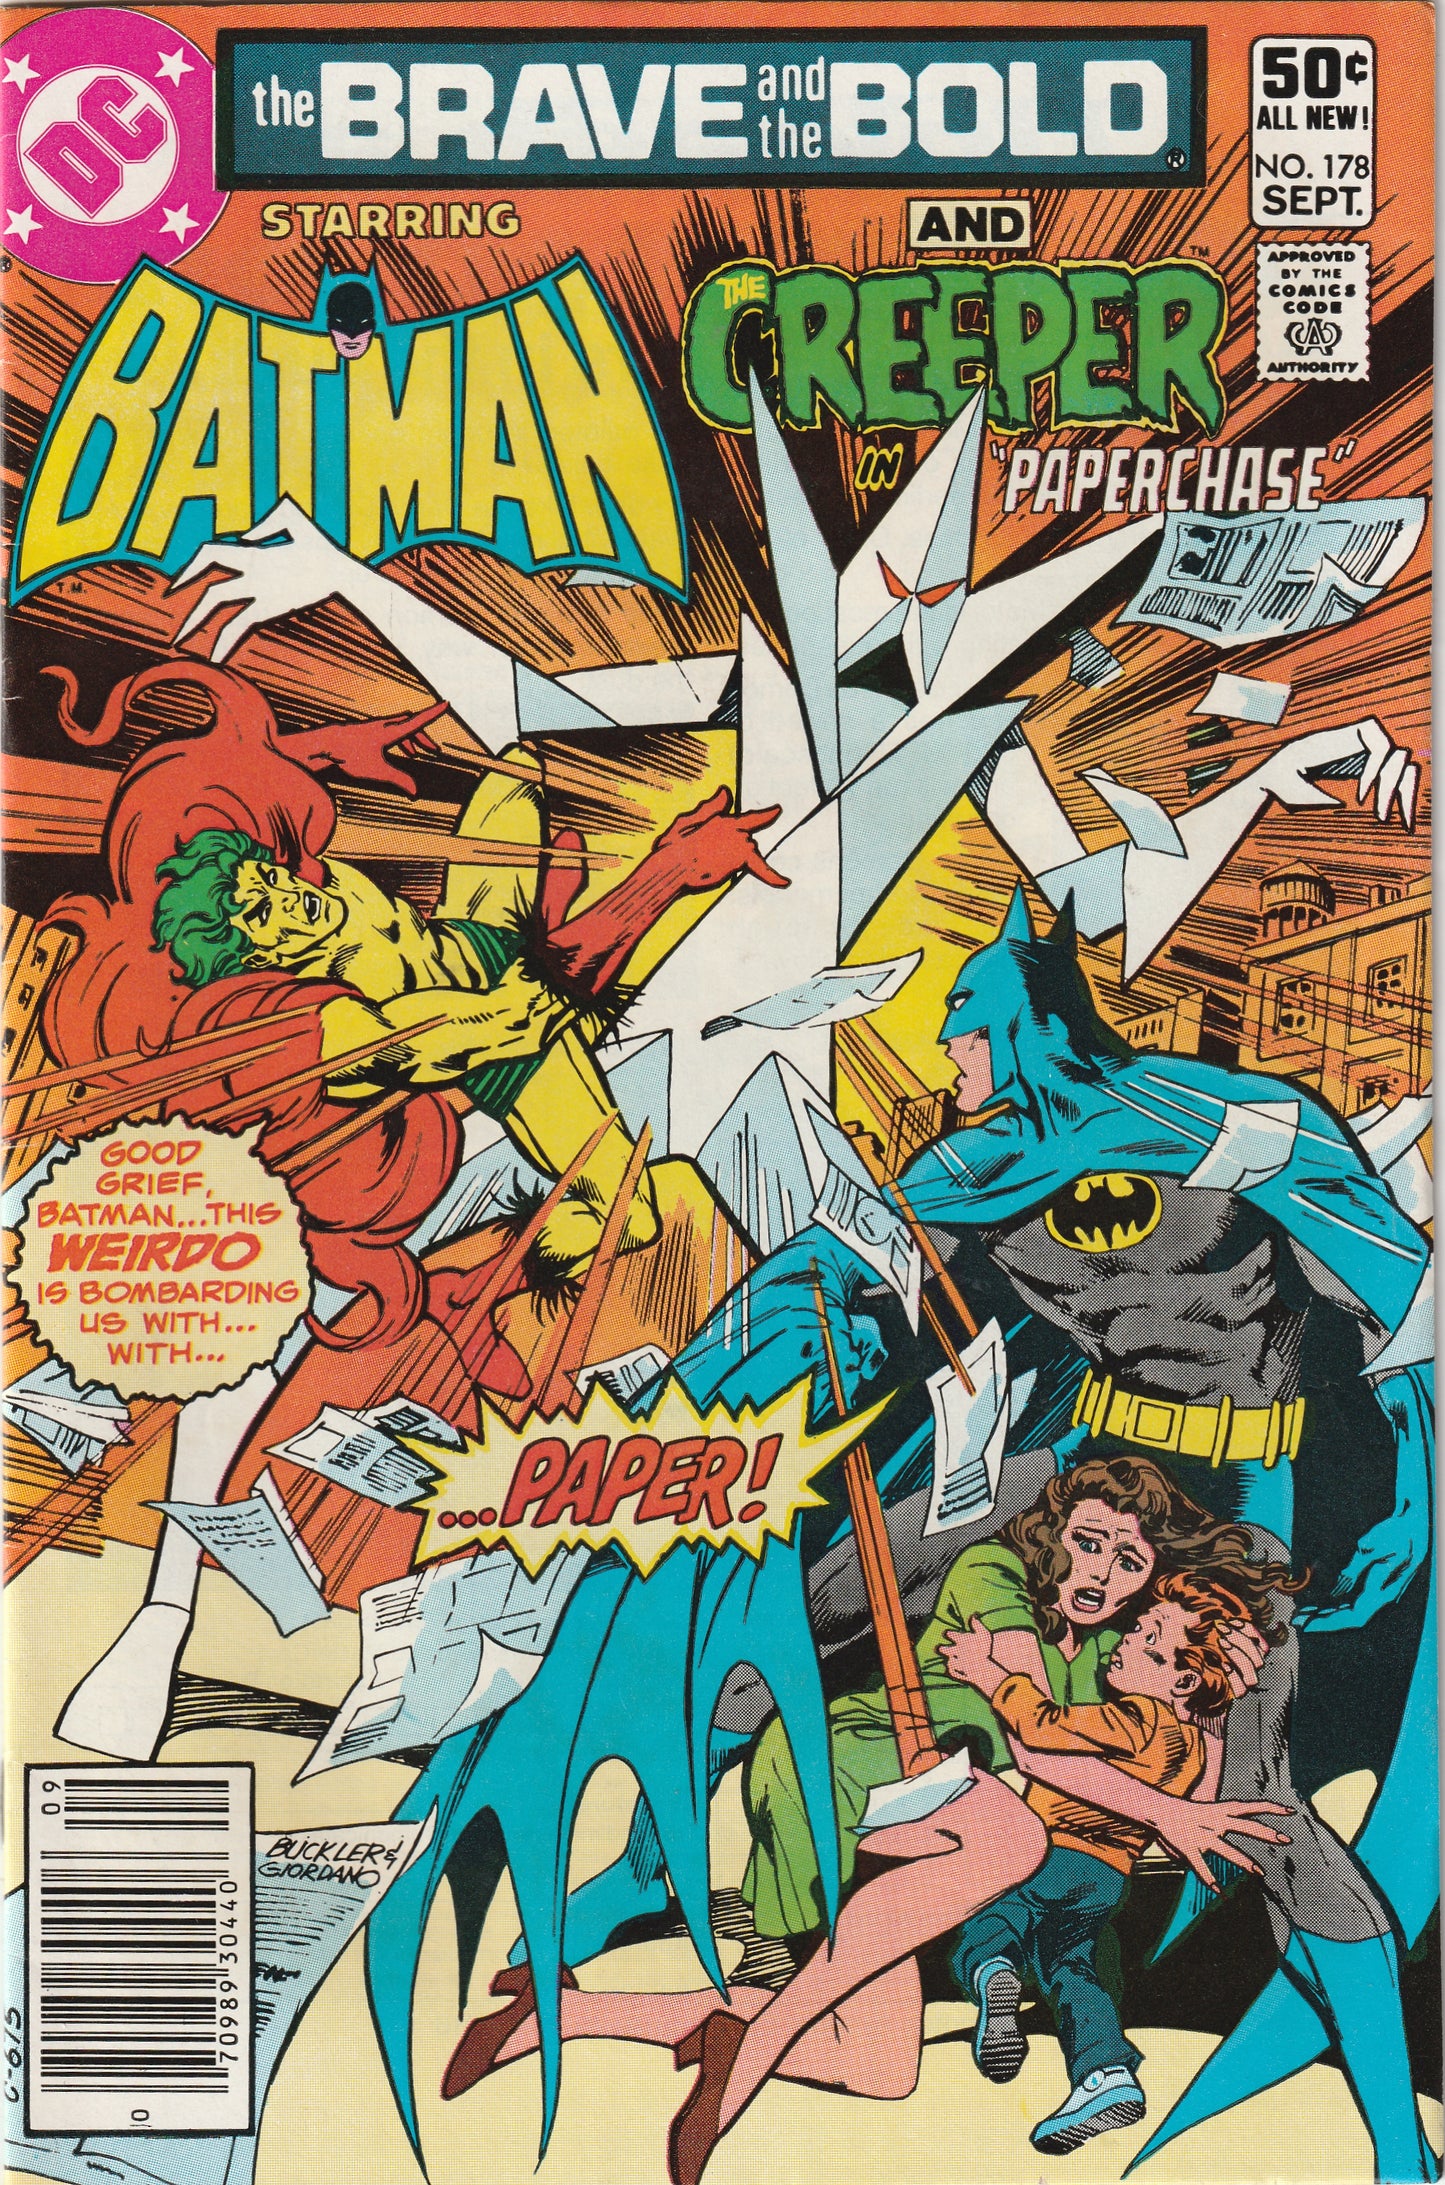 Brave and the Bold #178 (1981) - Batman & The Creeper